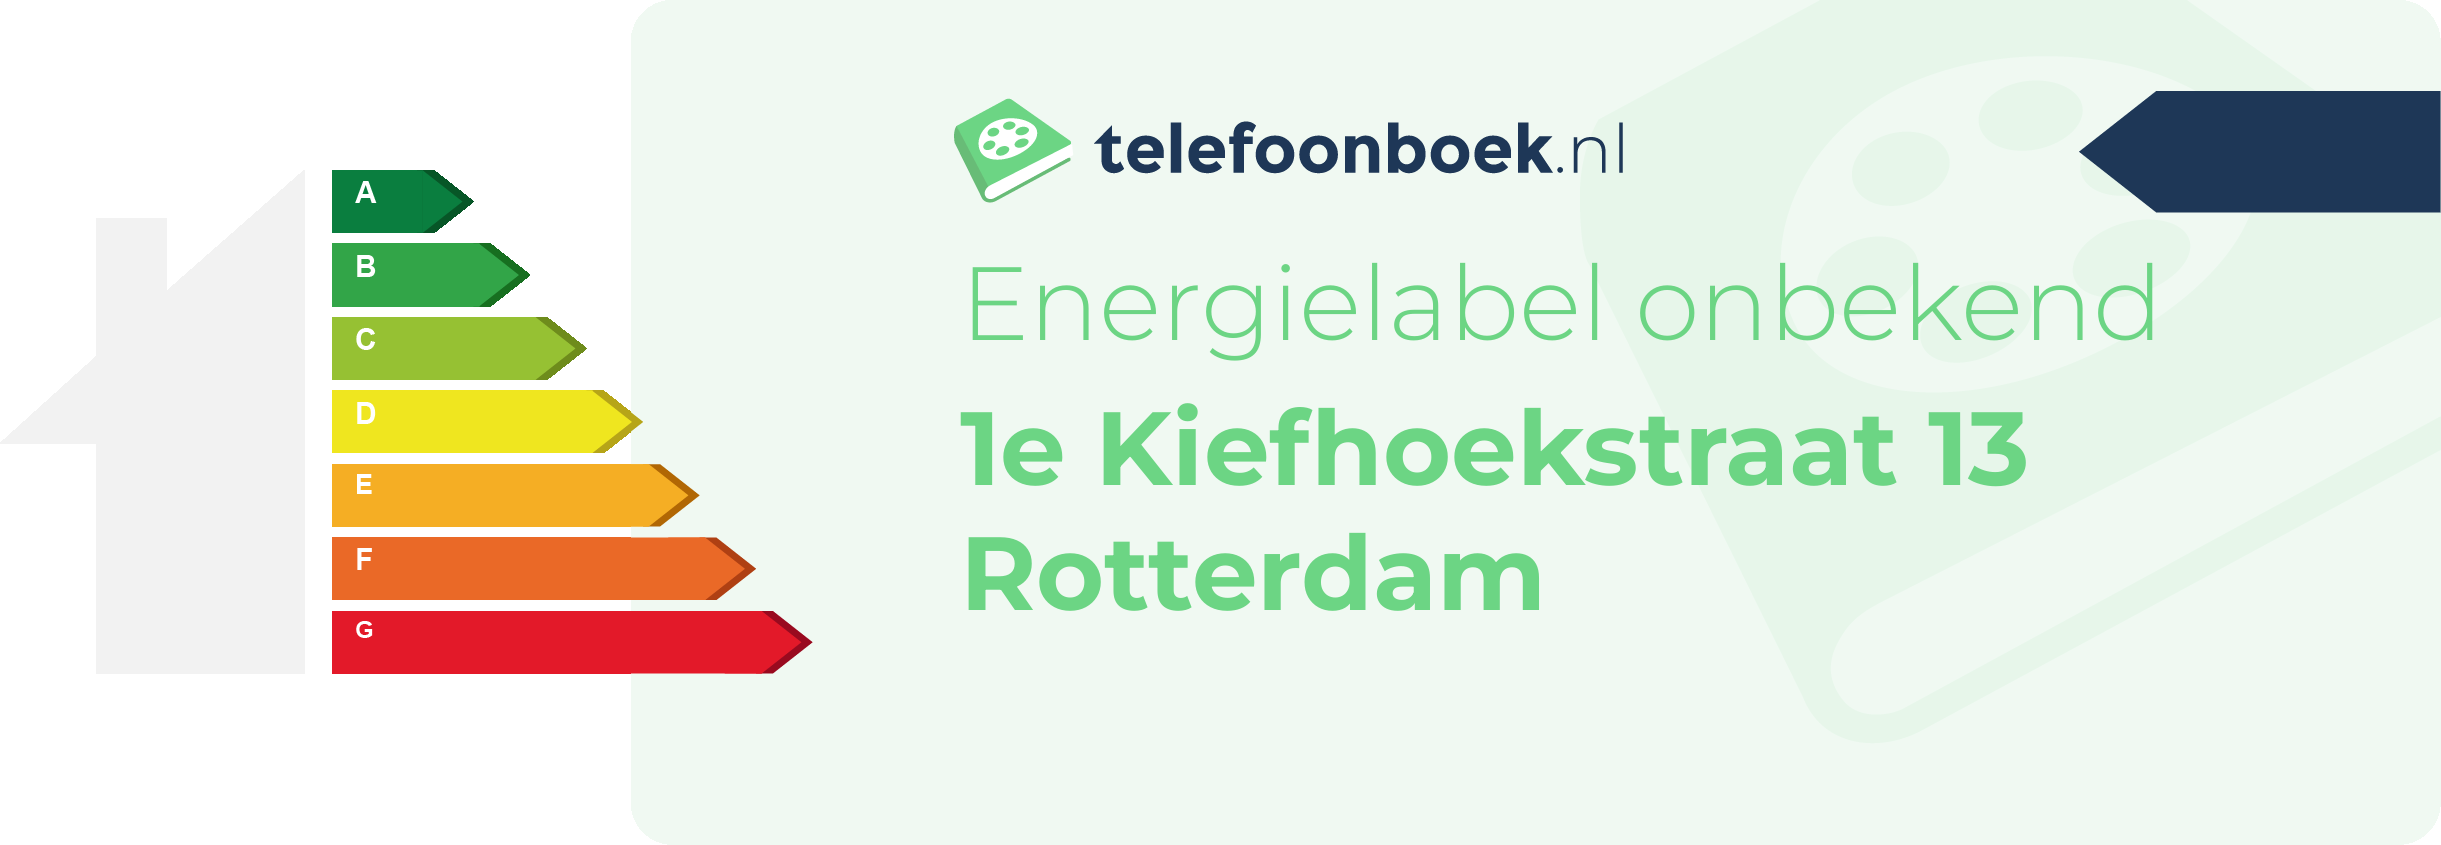 Energielabel 1e Kiefhoekstraat 13 Rotterdam